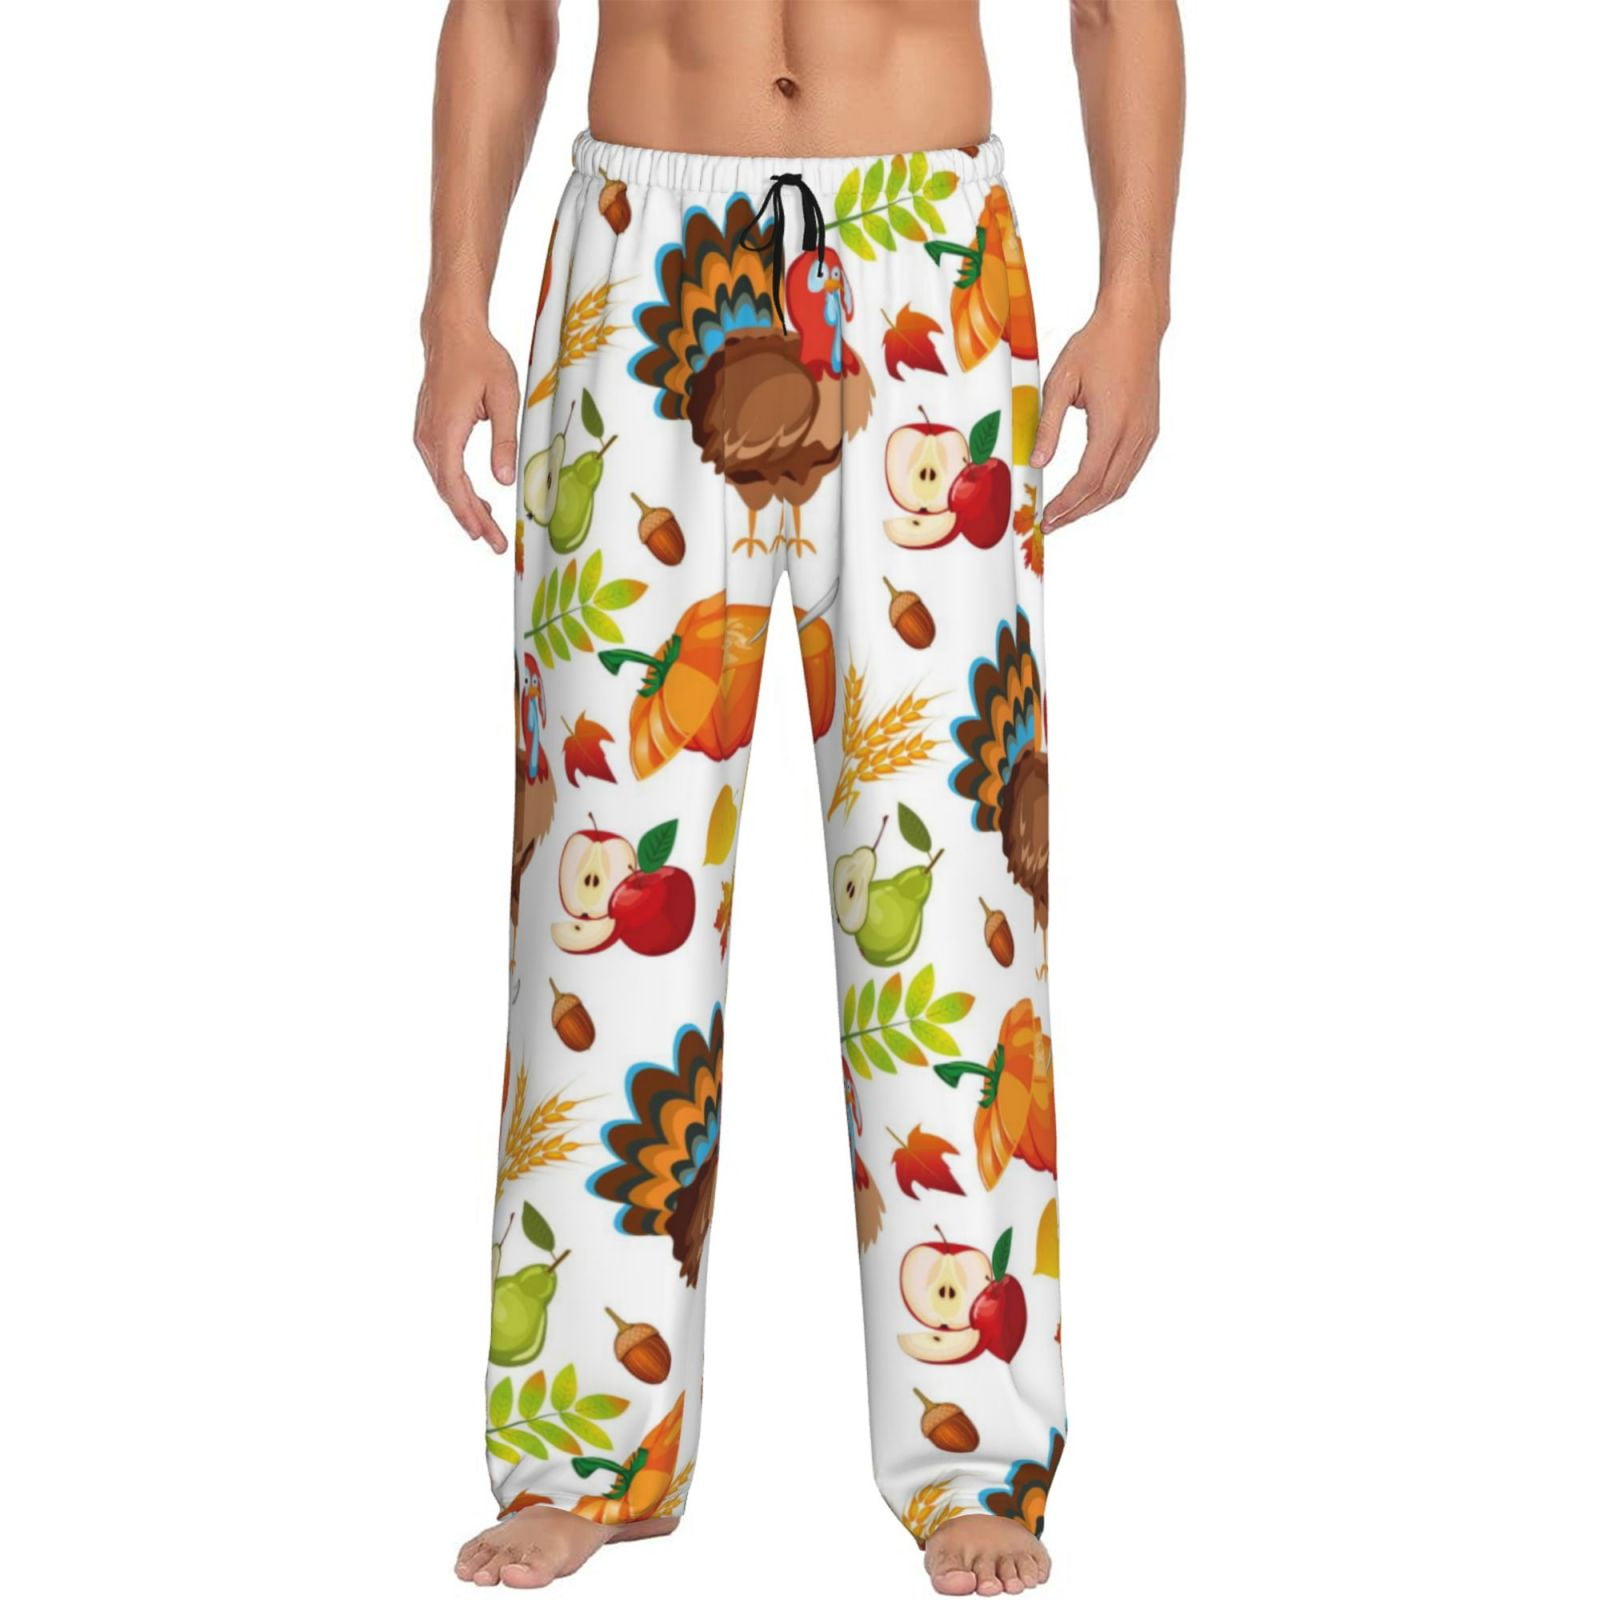 Fotbe Men's Pajama Pants,Sleepwear Pants,Pj Bottoms Drawstring And ...